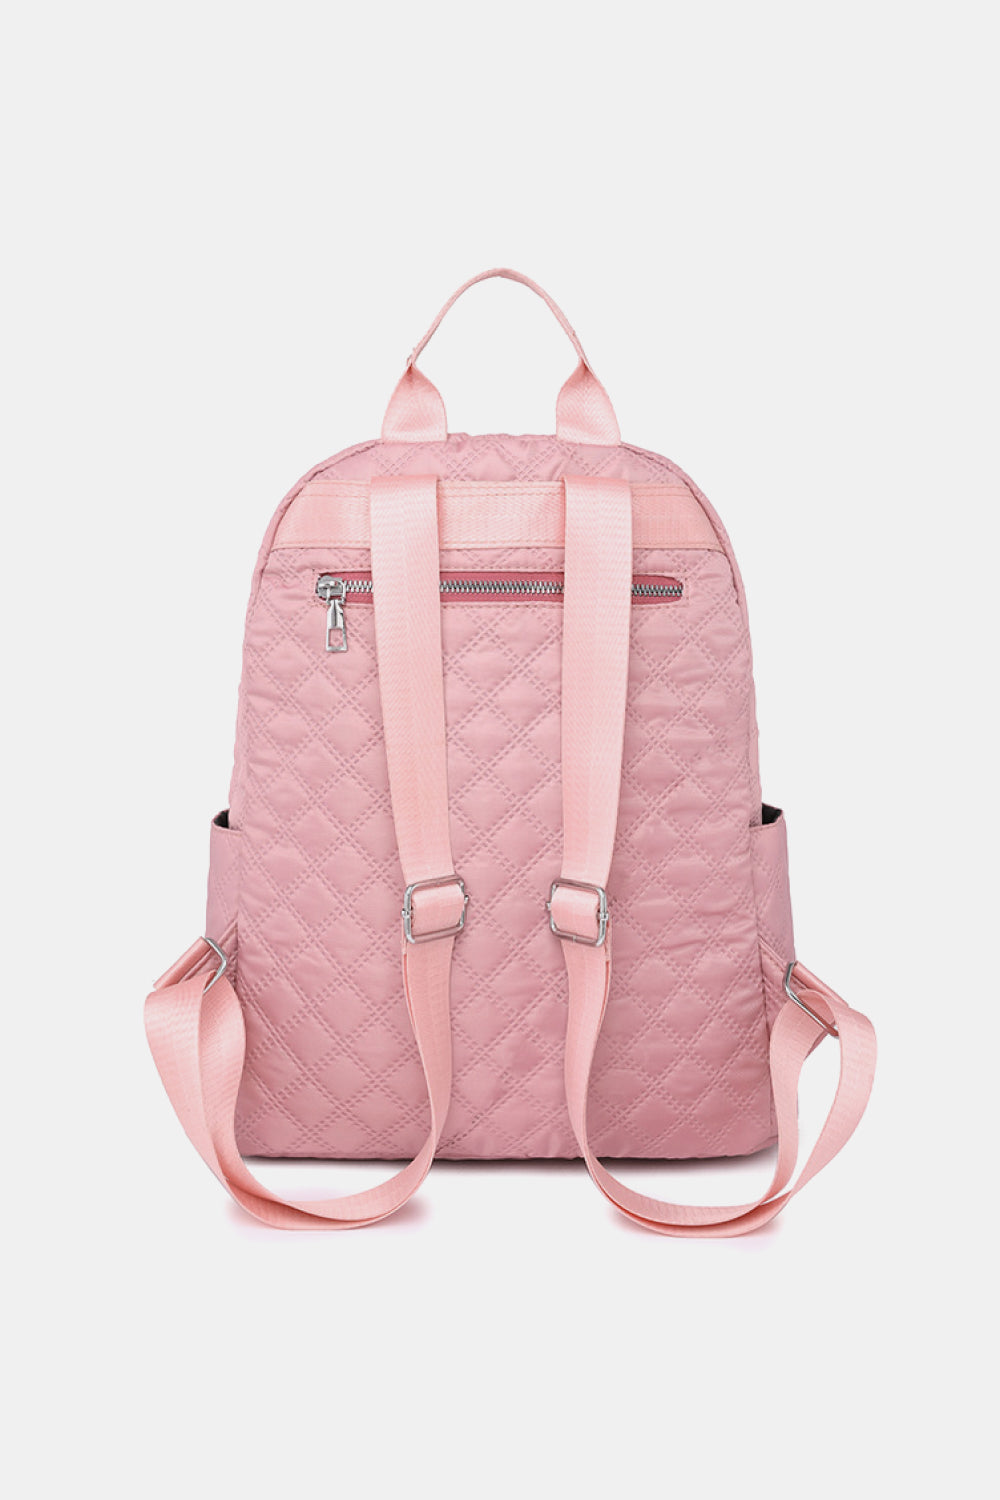 Misty Rose Barbie Dreams Medium Polyester Backpack Handbags